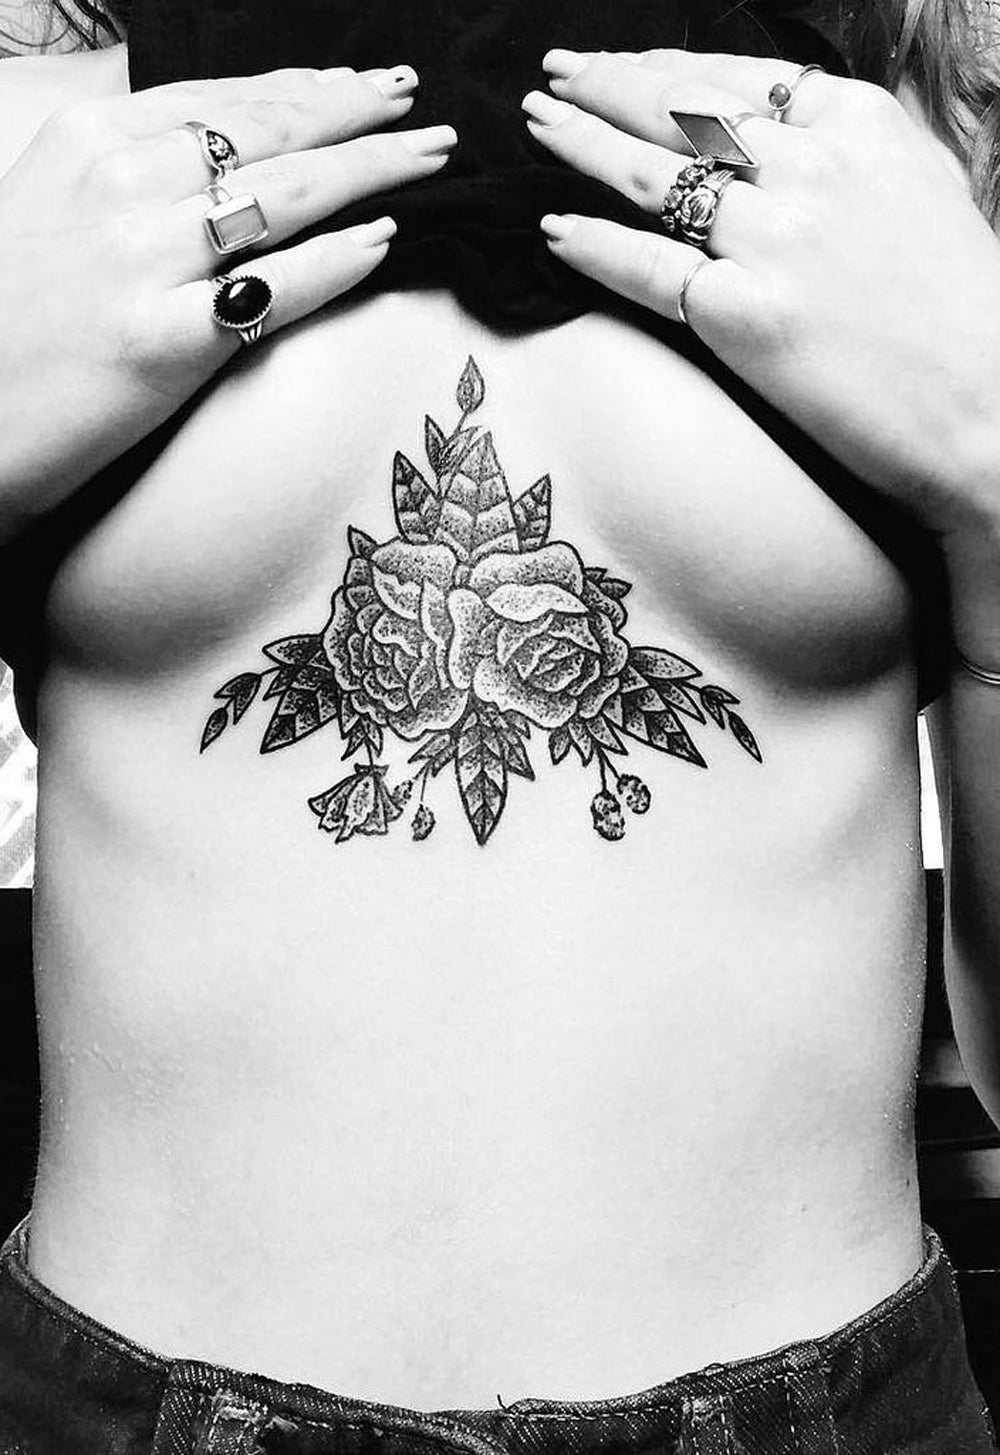 Black & White Floral Flower Sternum Tattoo Ideas for Women - Cute Rose Underboob Chest Tatt for Teenagers - www.MyBodiArt.com